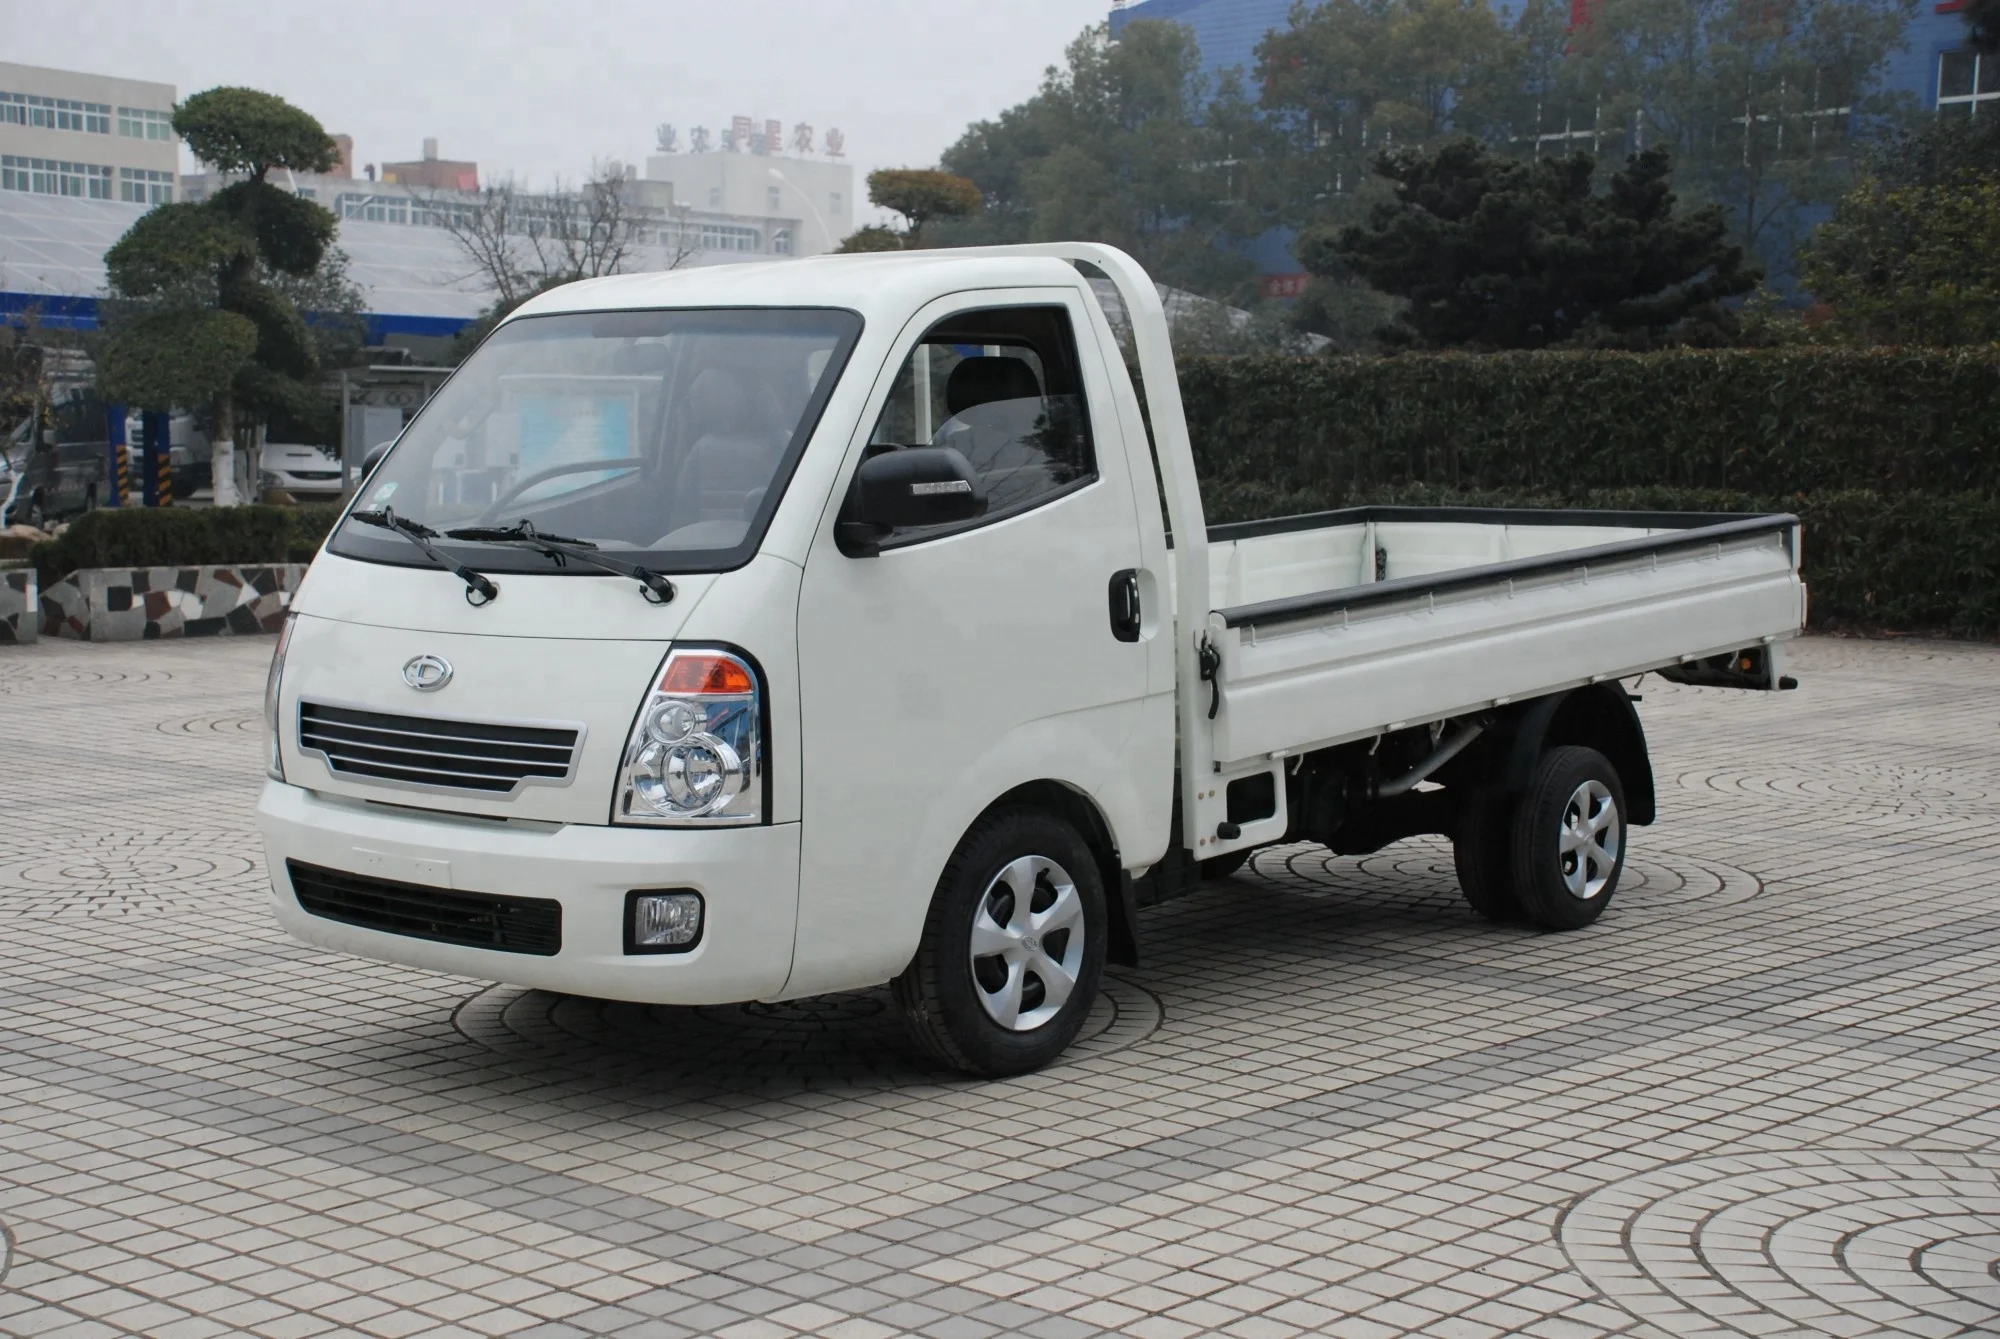 Купить японский грузовик до 3 тонн. Китайские мини грузовик hi1345g. Мини грузовик ФАВ 1.5Т. Китайские Грузовики до 1.5 тонн 4х4 стелс. Грузовик FAW 1,5 1.5 тонны.